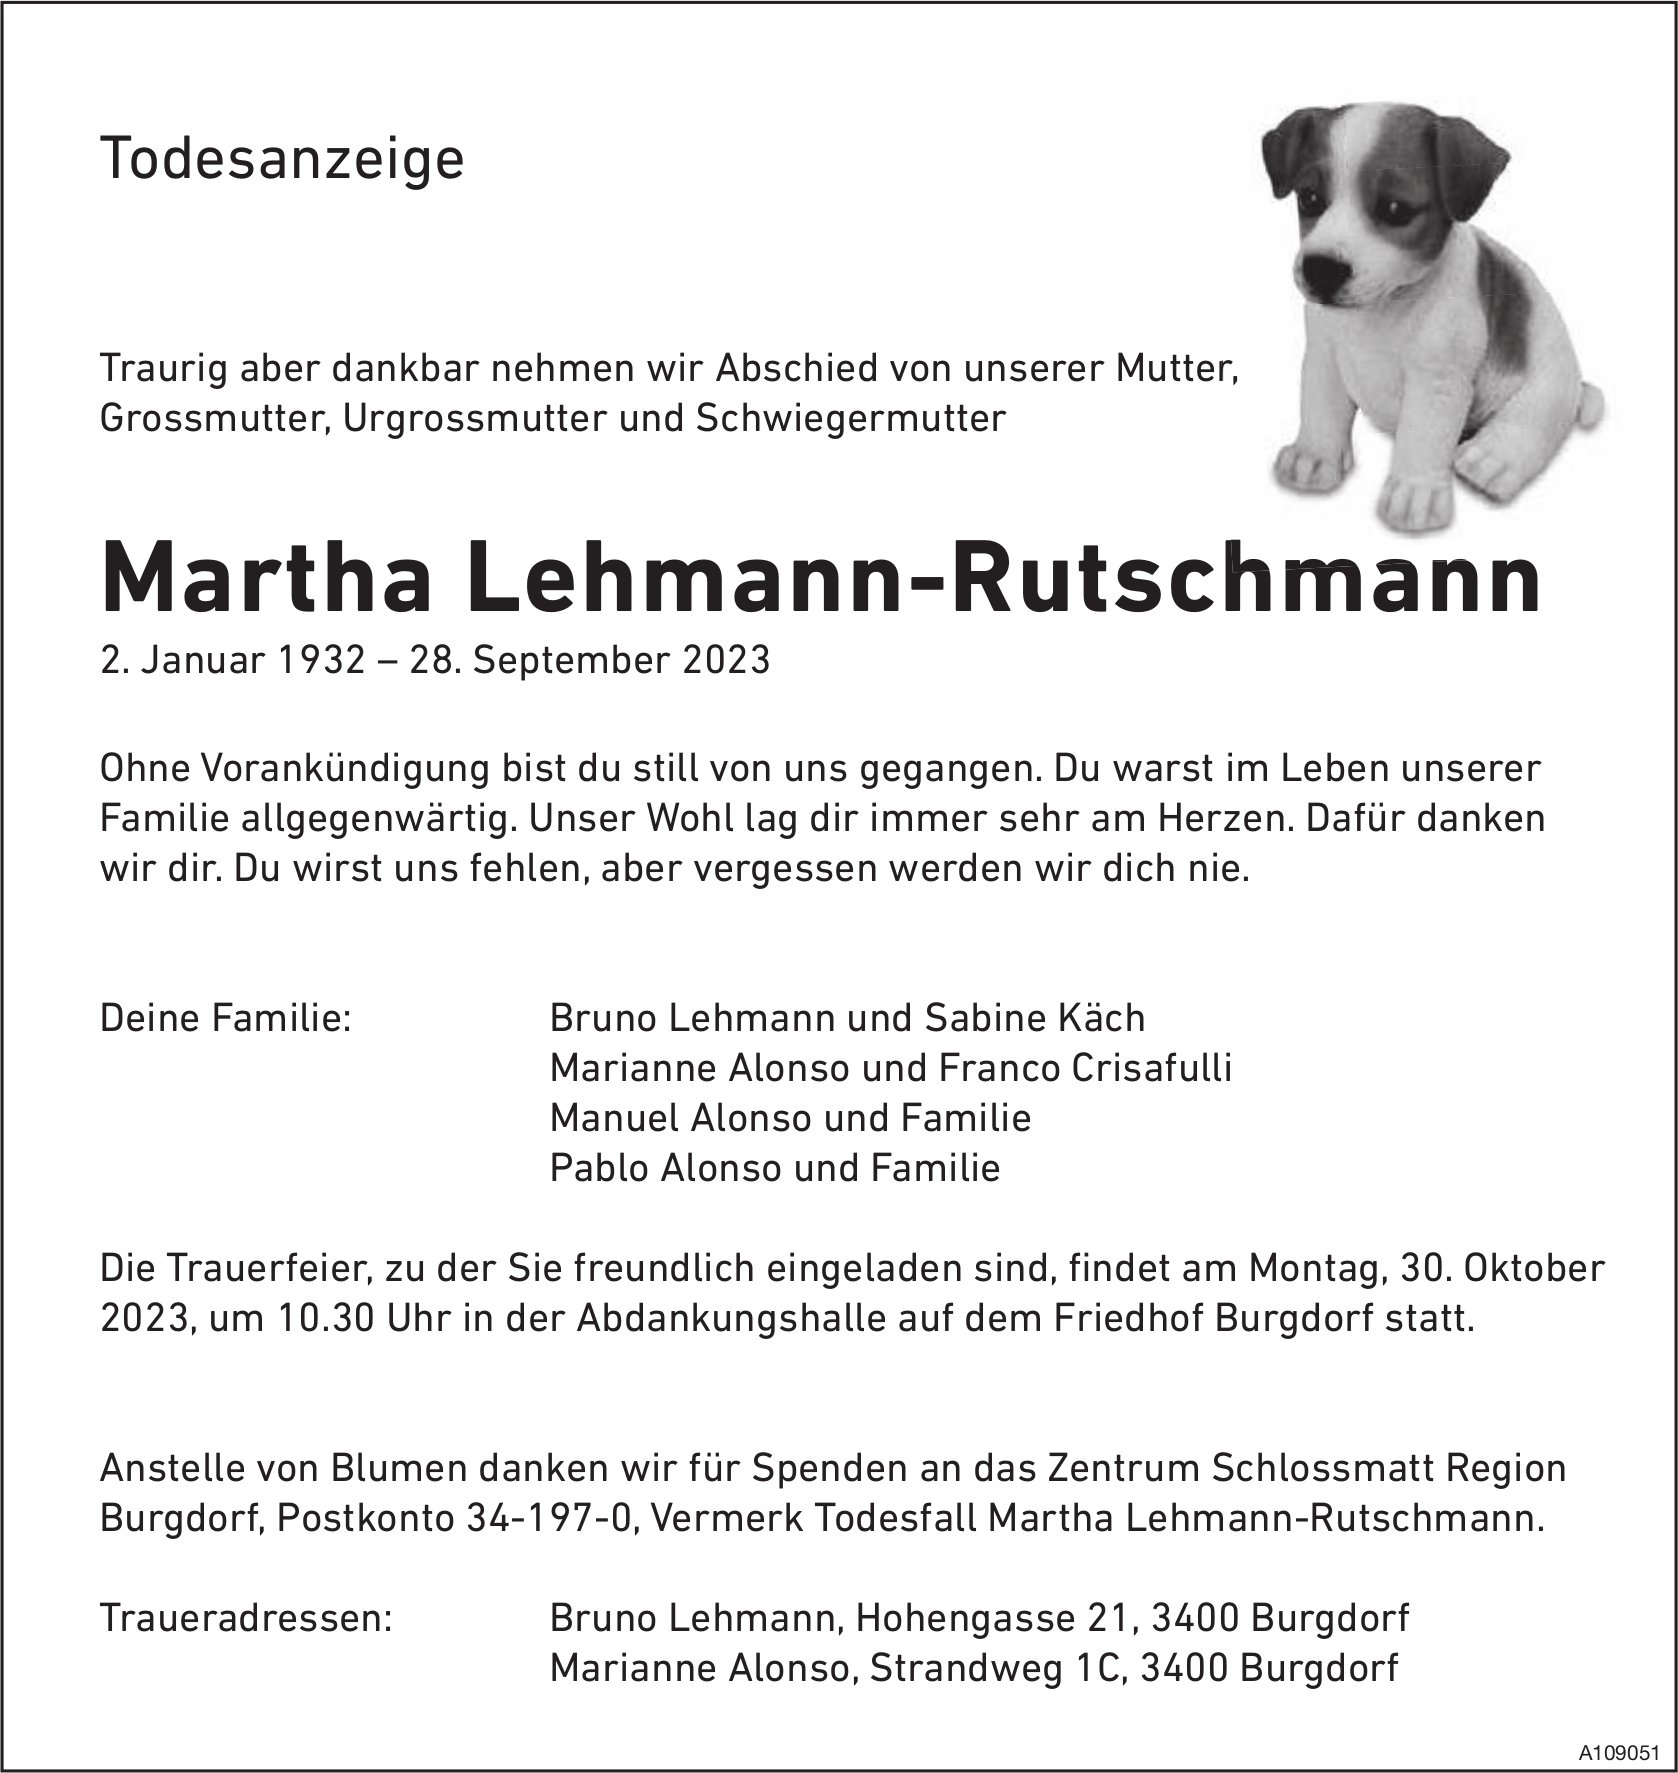 Martha Lehmann-Rutschmann, September 2023 / TA